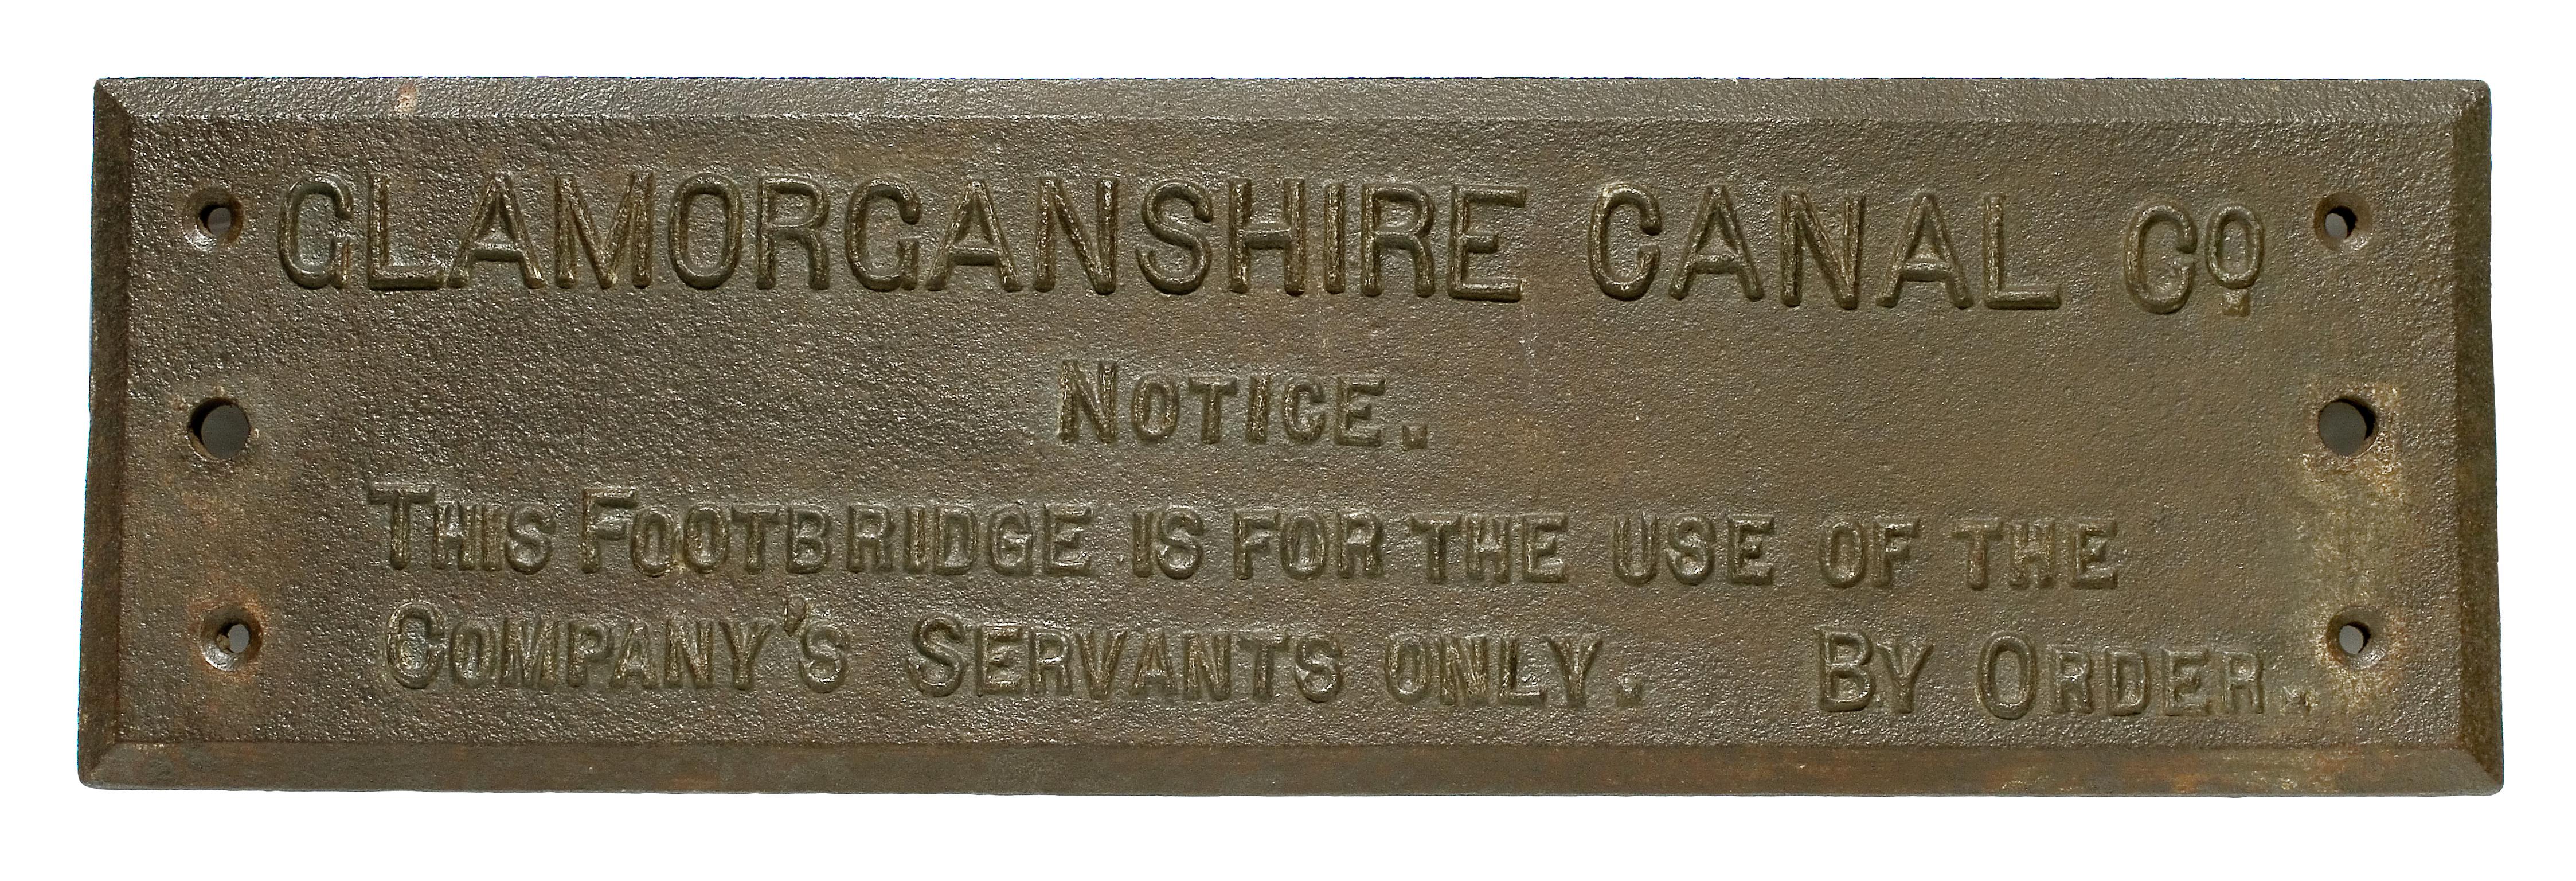 Glamorganshire Canal, notice